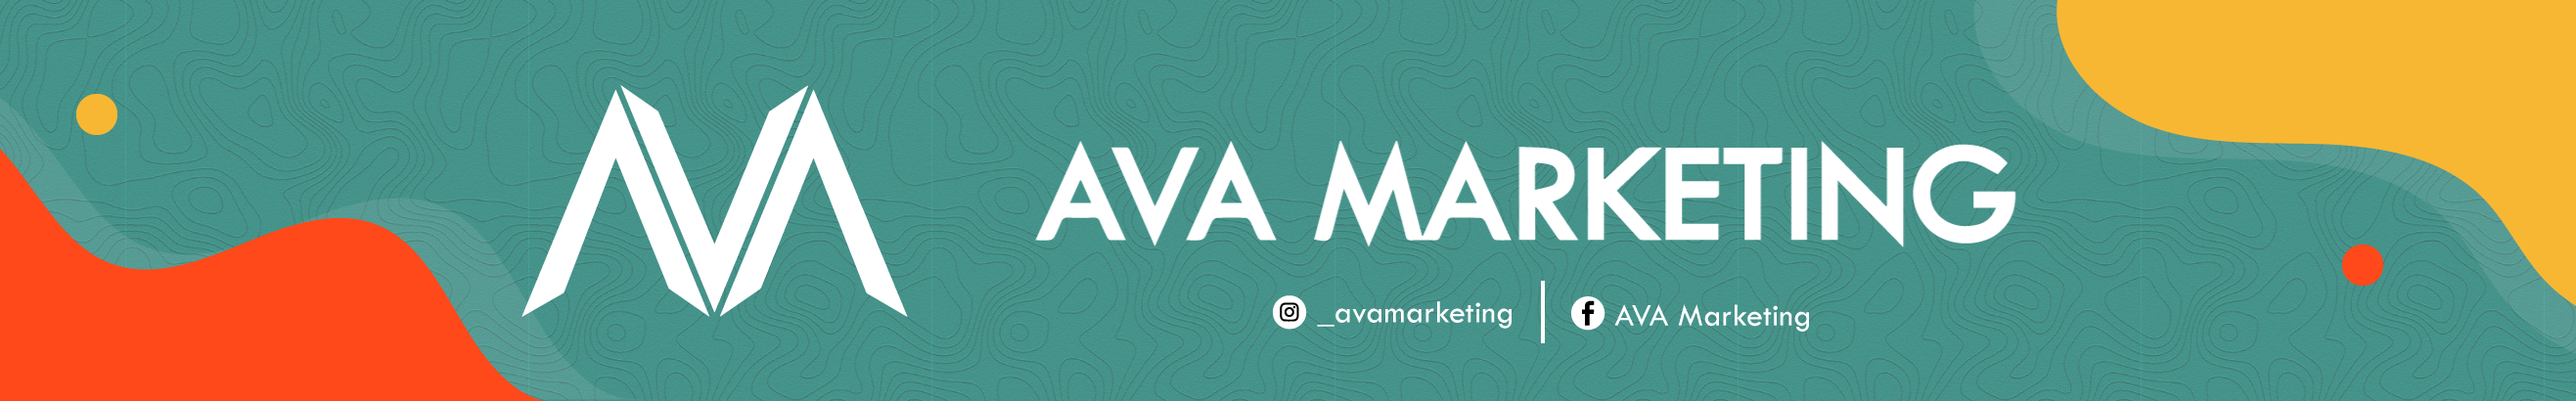 AVA Marketing's profile banner